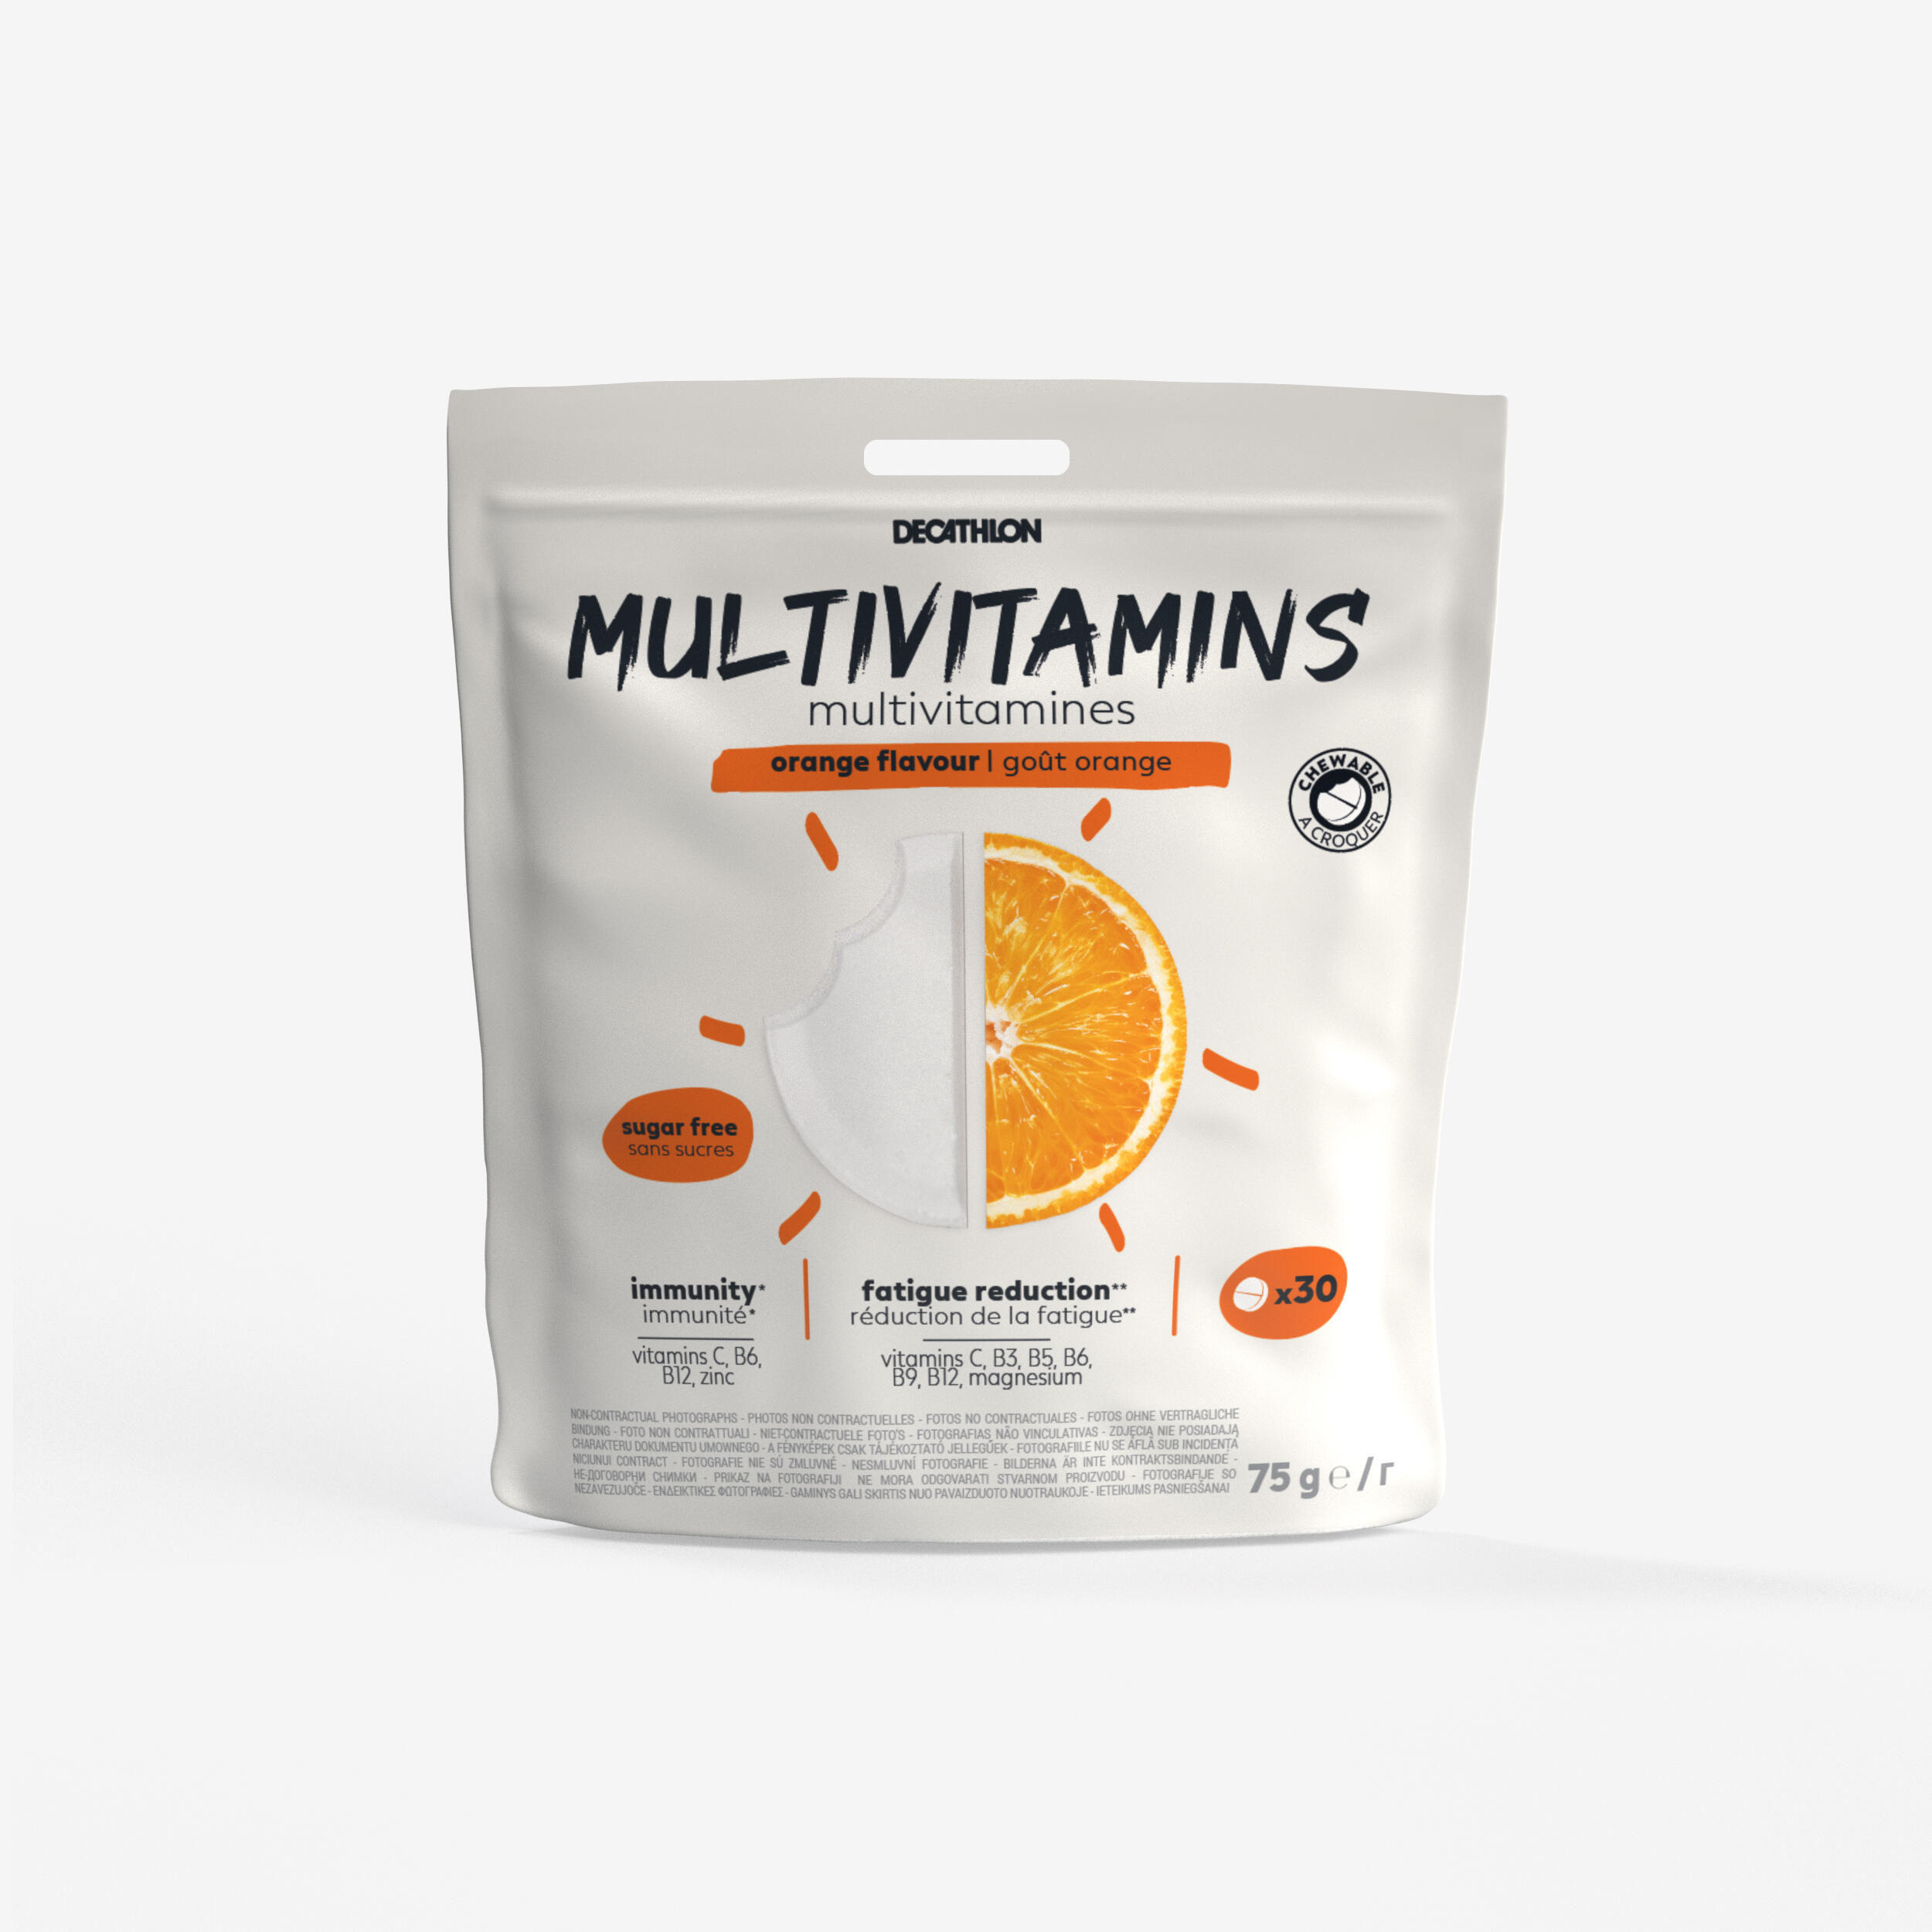 Multivitamins and sugar-free natural orange flavour - 30 tablets 1/2